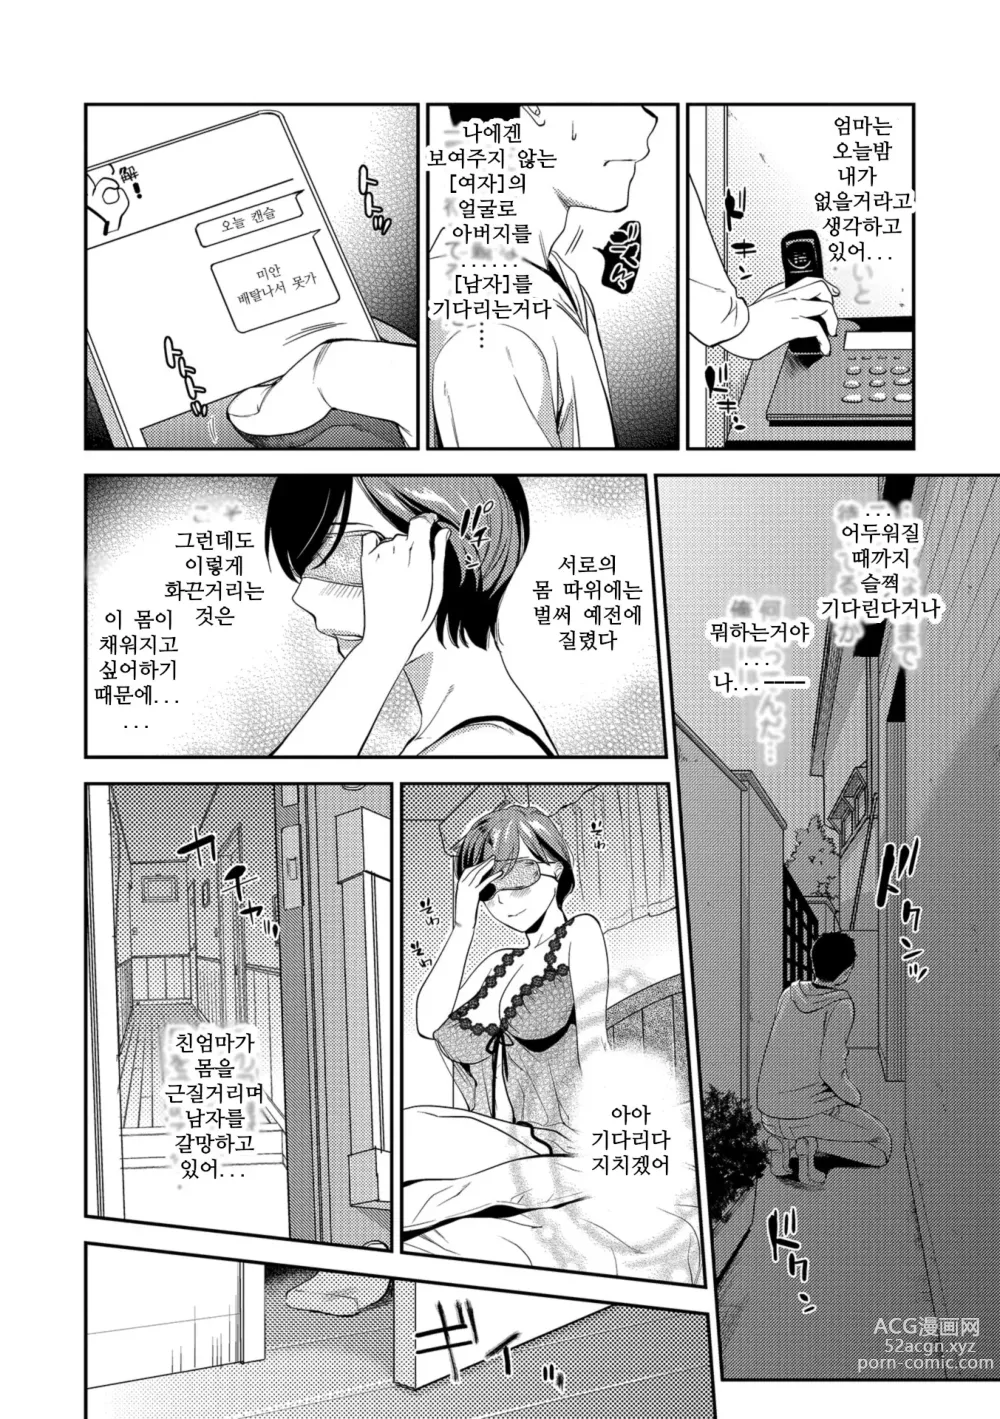 Page 7 of manga Mekakushi Inbo